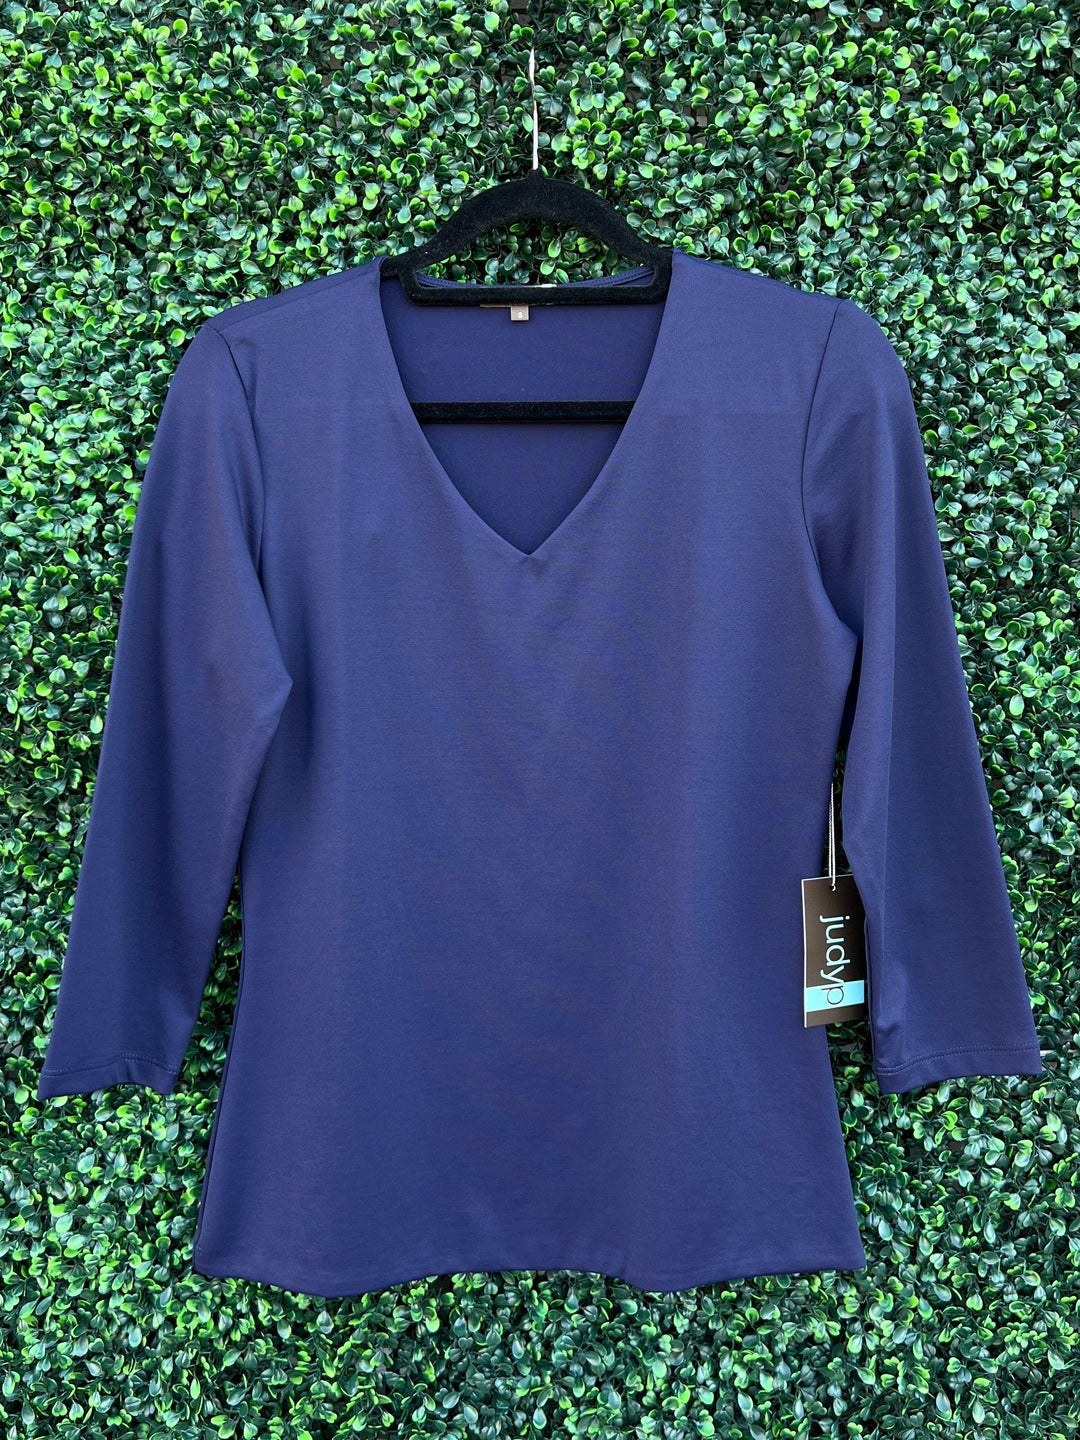 online boutique navy blue shirt